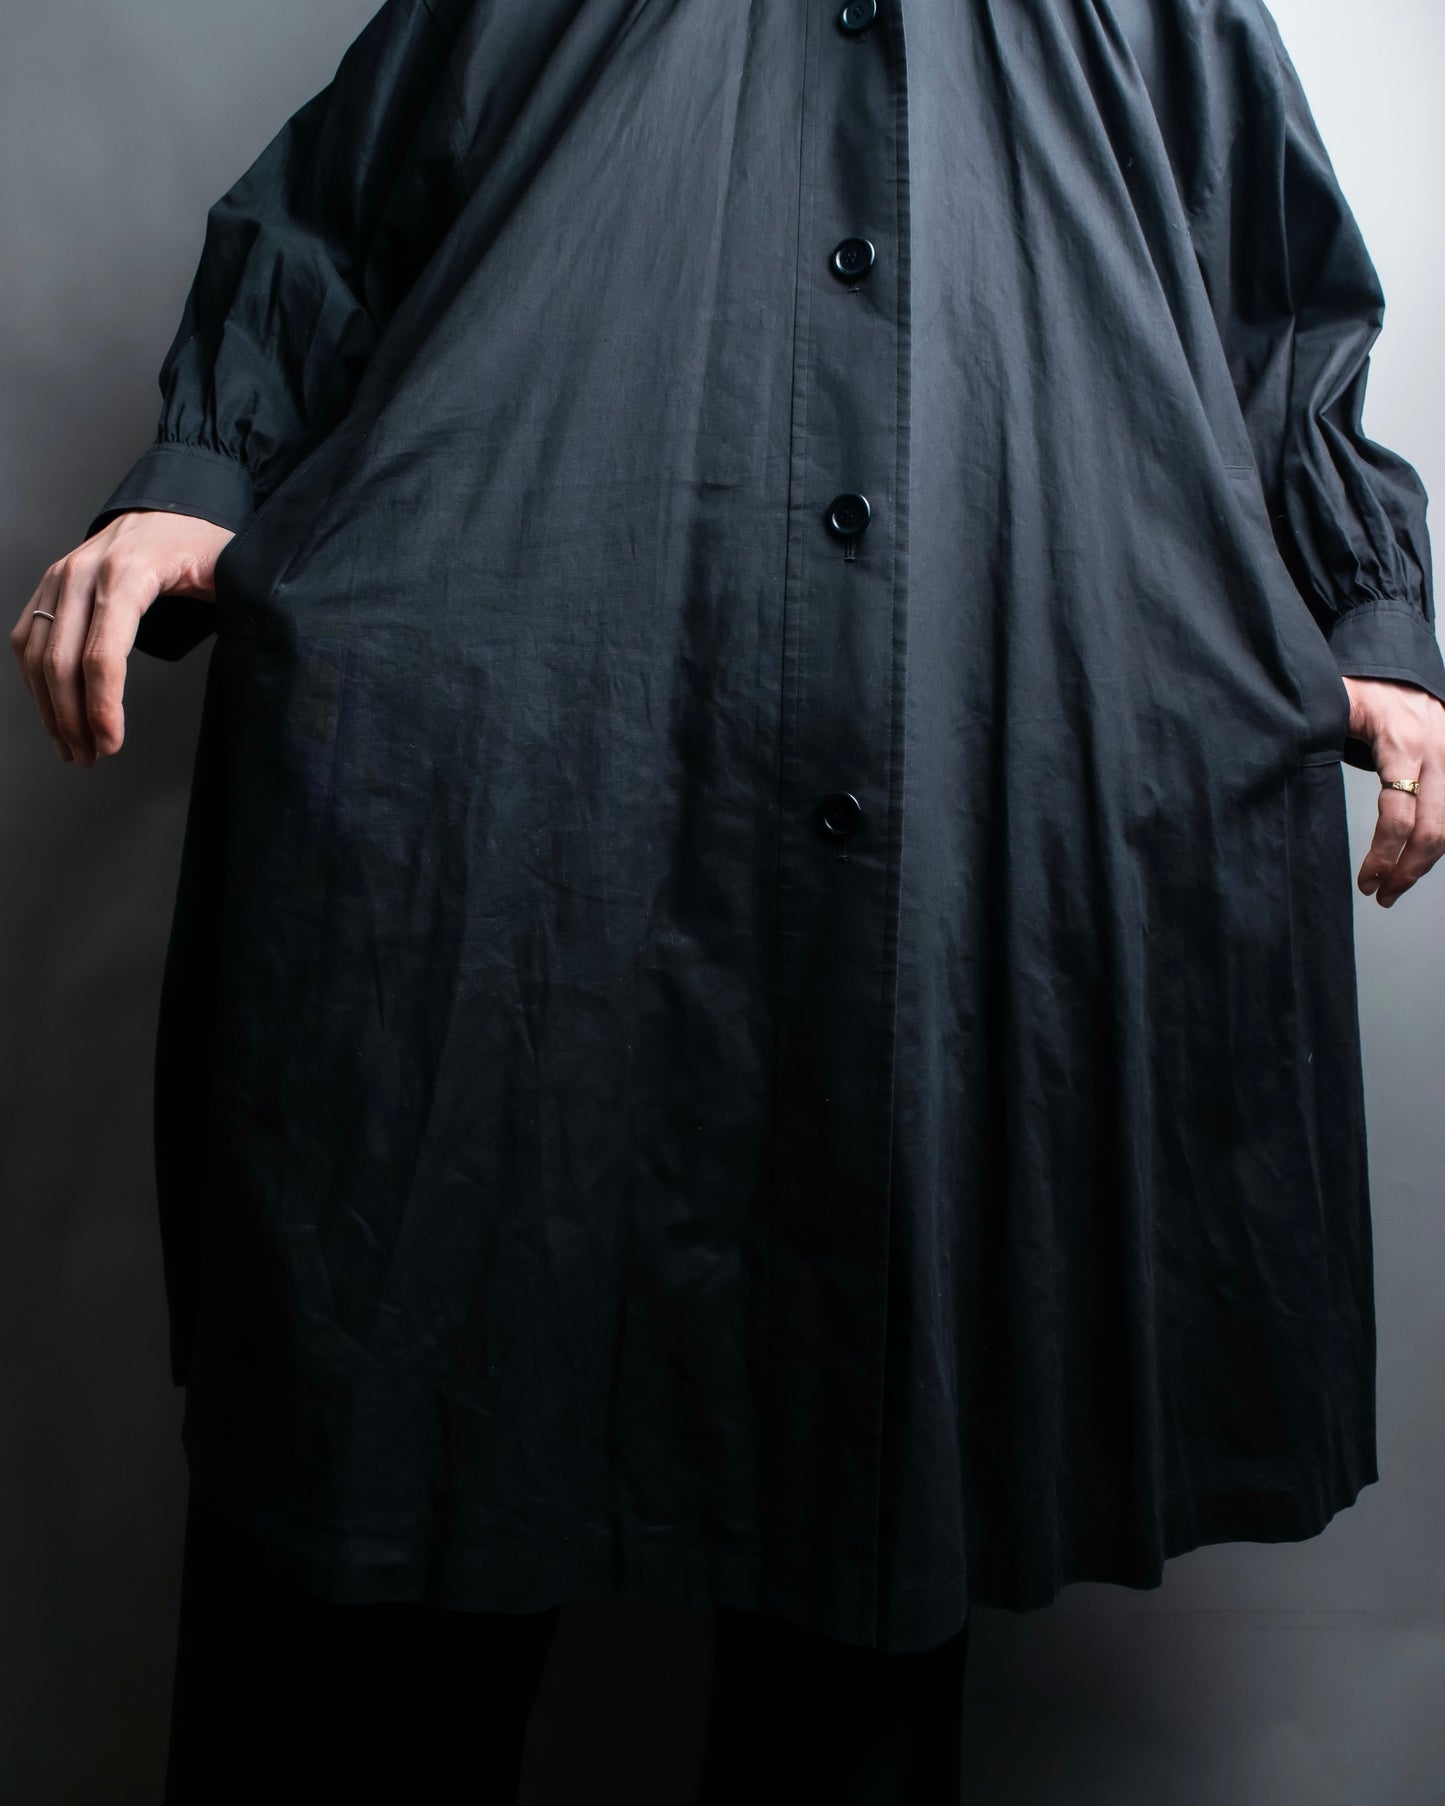 "YVES SAINT LAURENT" Black mode style shirt coat